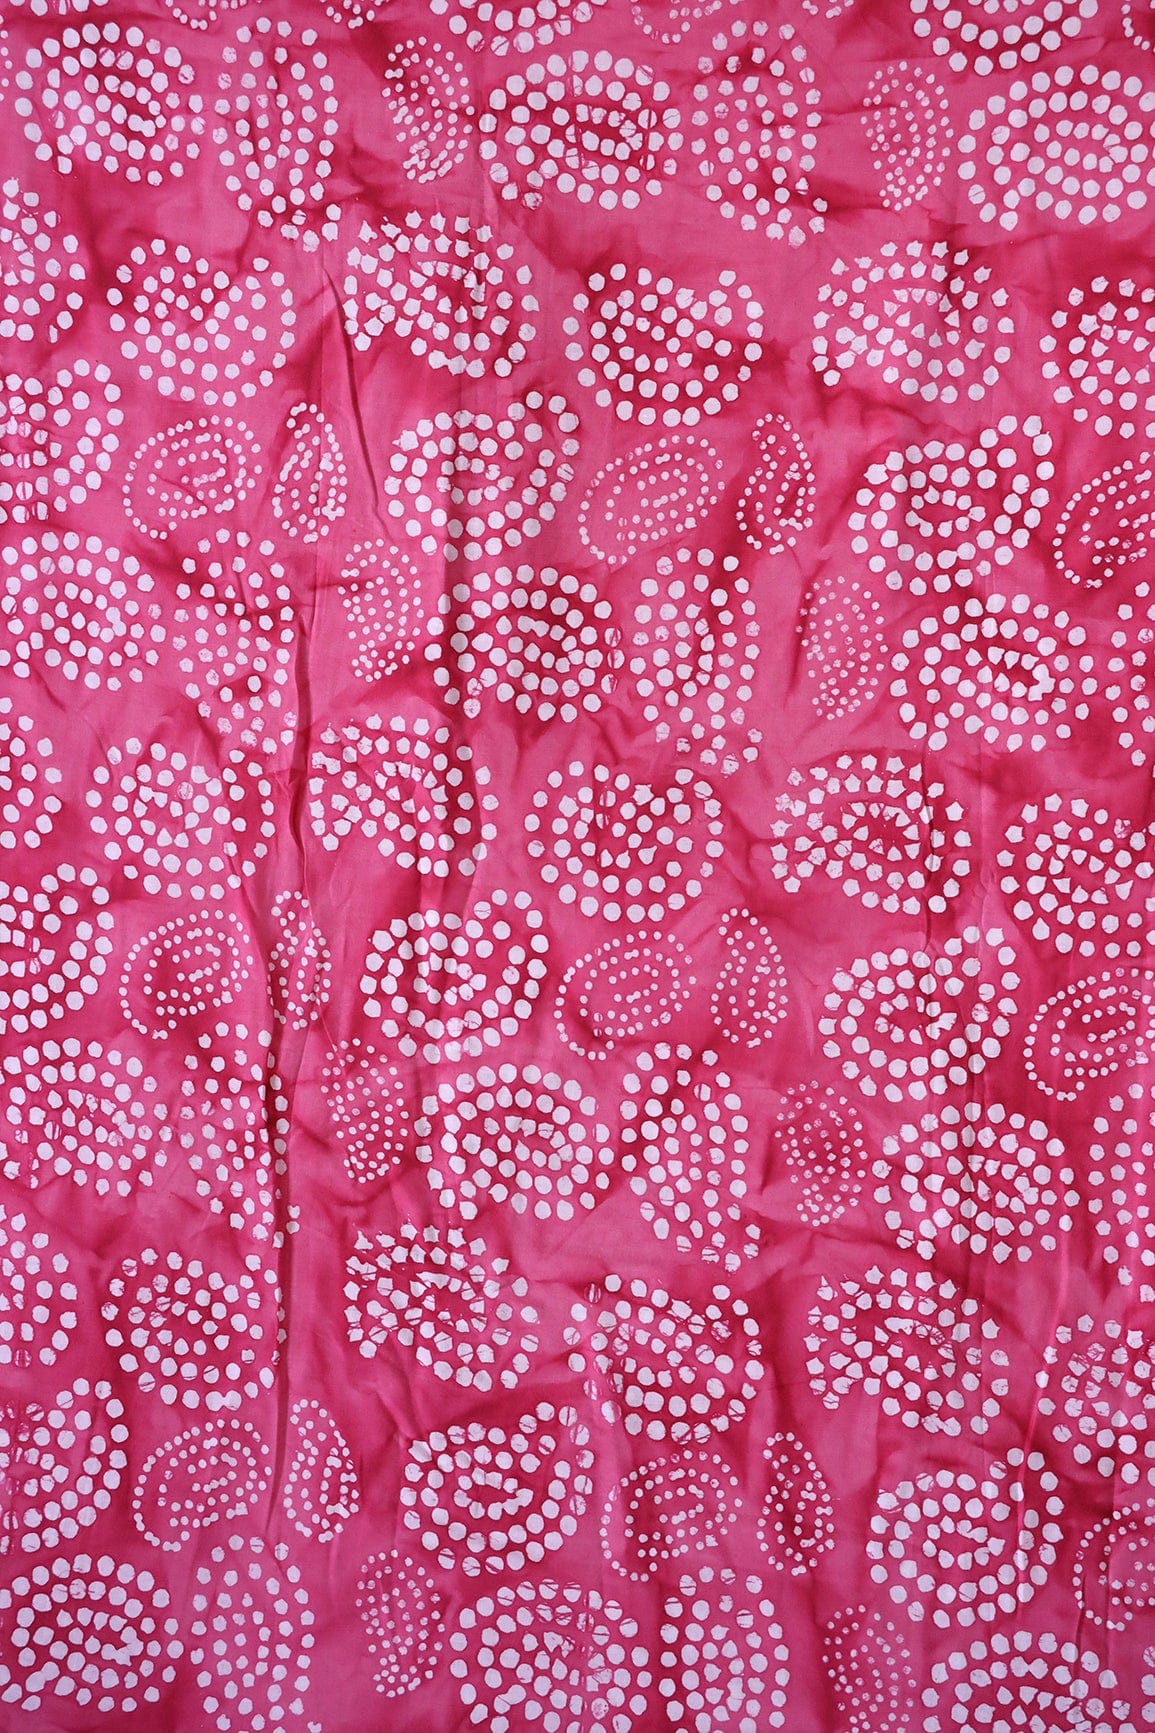 doeraa Prints White And Dark Pink Paisley Pattern Batik Handblock Organic Cotton Fabric